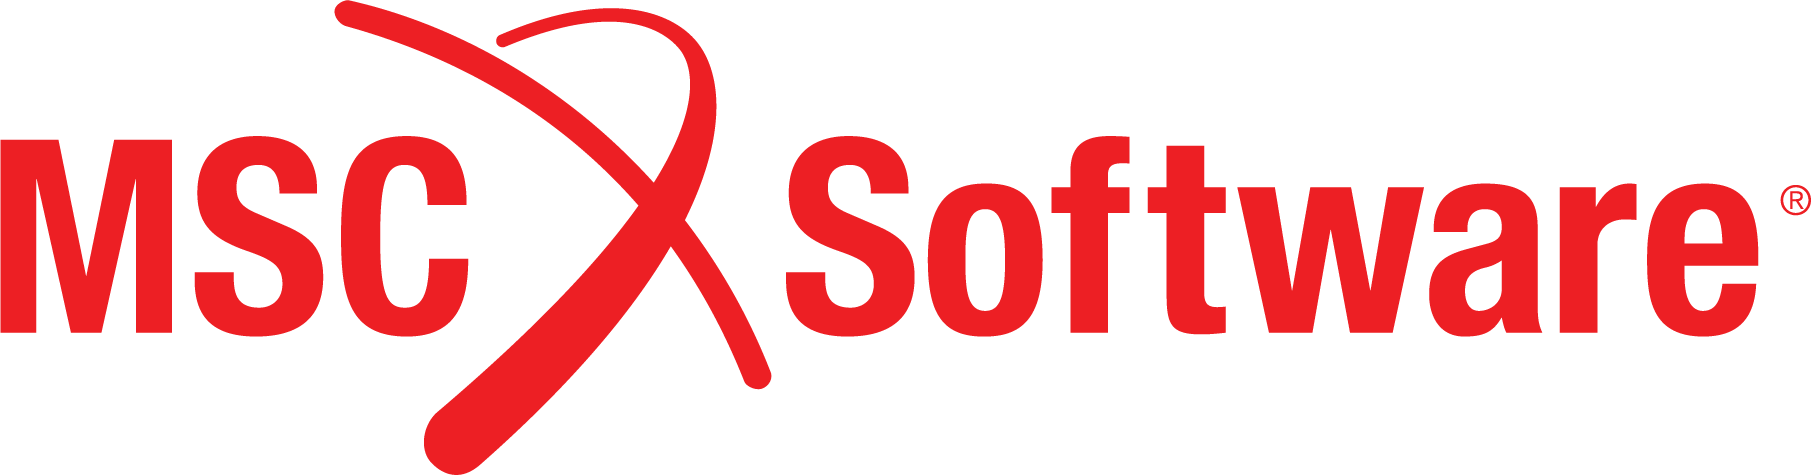 msc software logo